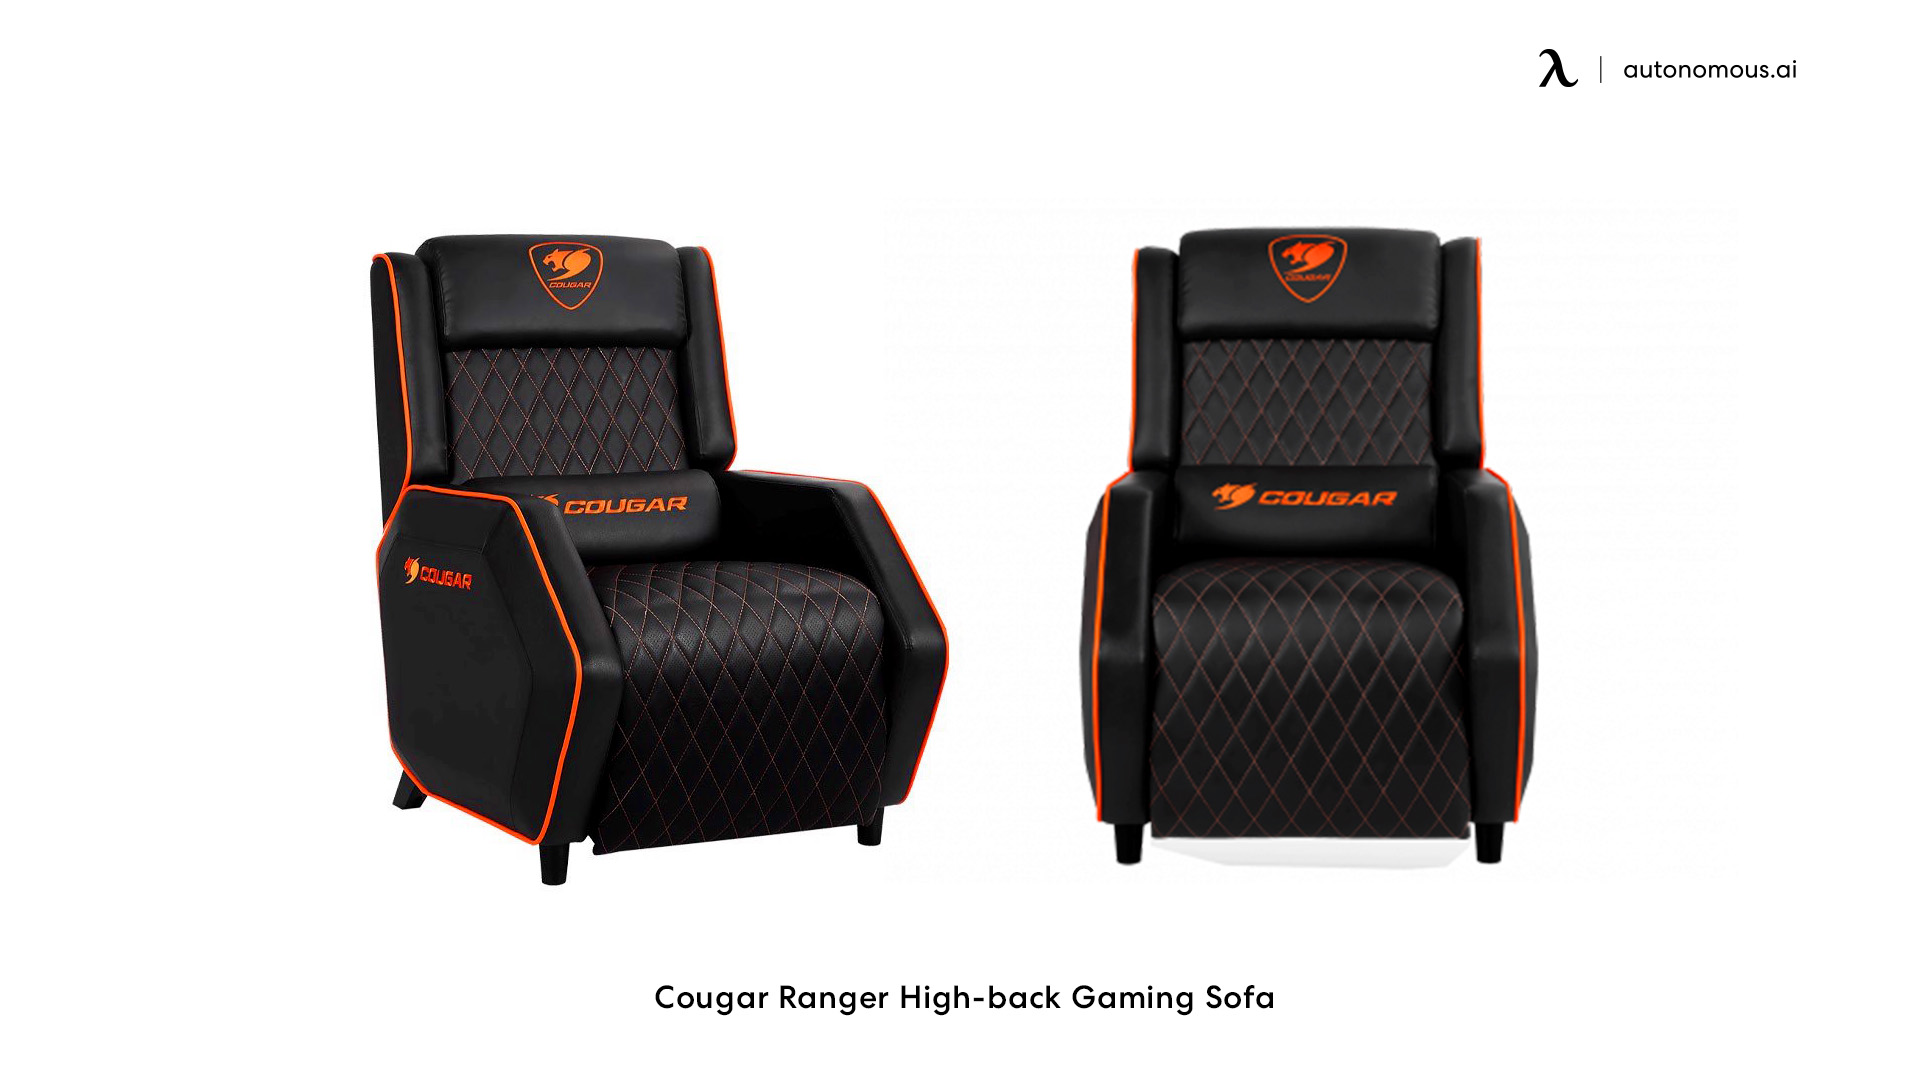 Cougar Ranger High-back Gaming Sofa